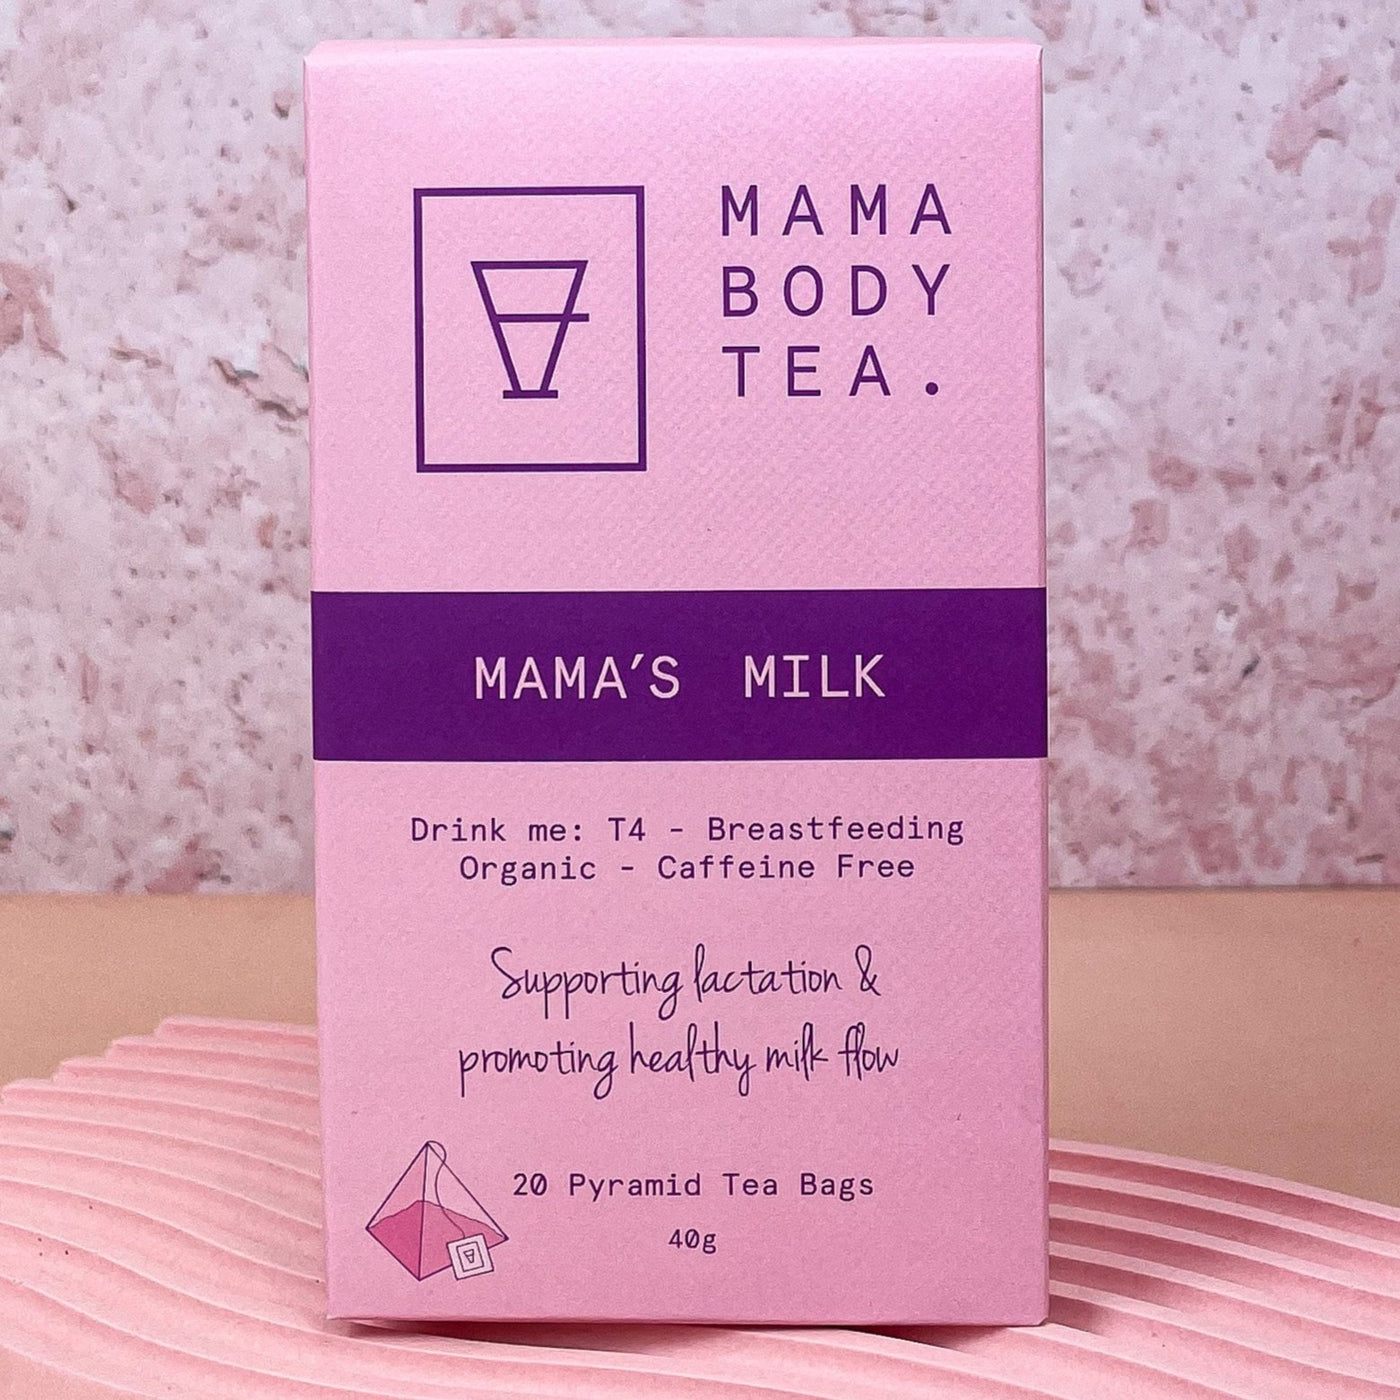 Mamas Milk - Mama Body Tea